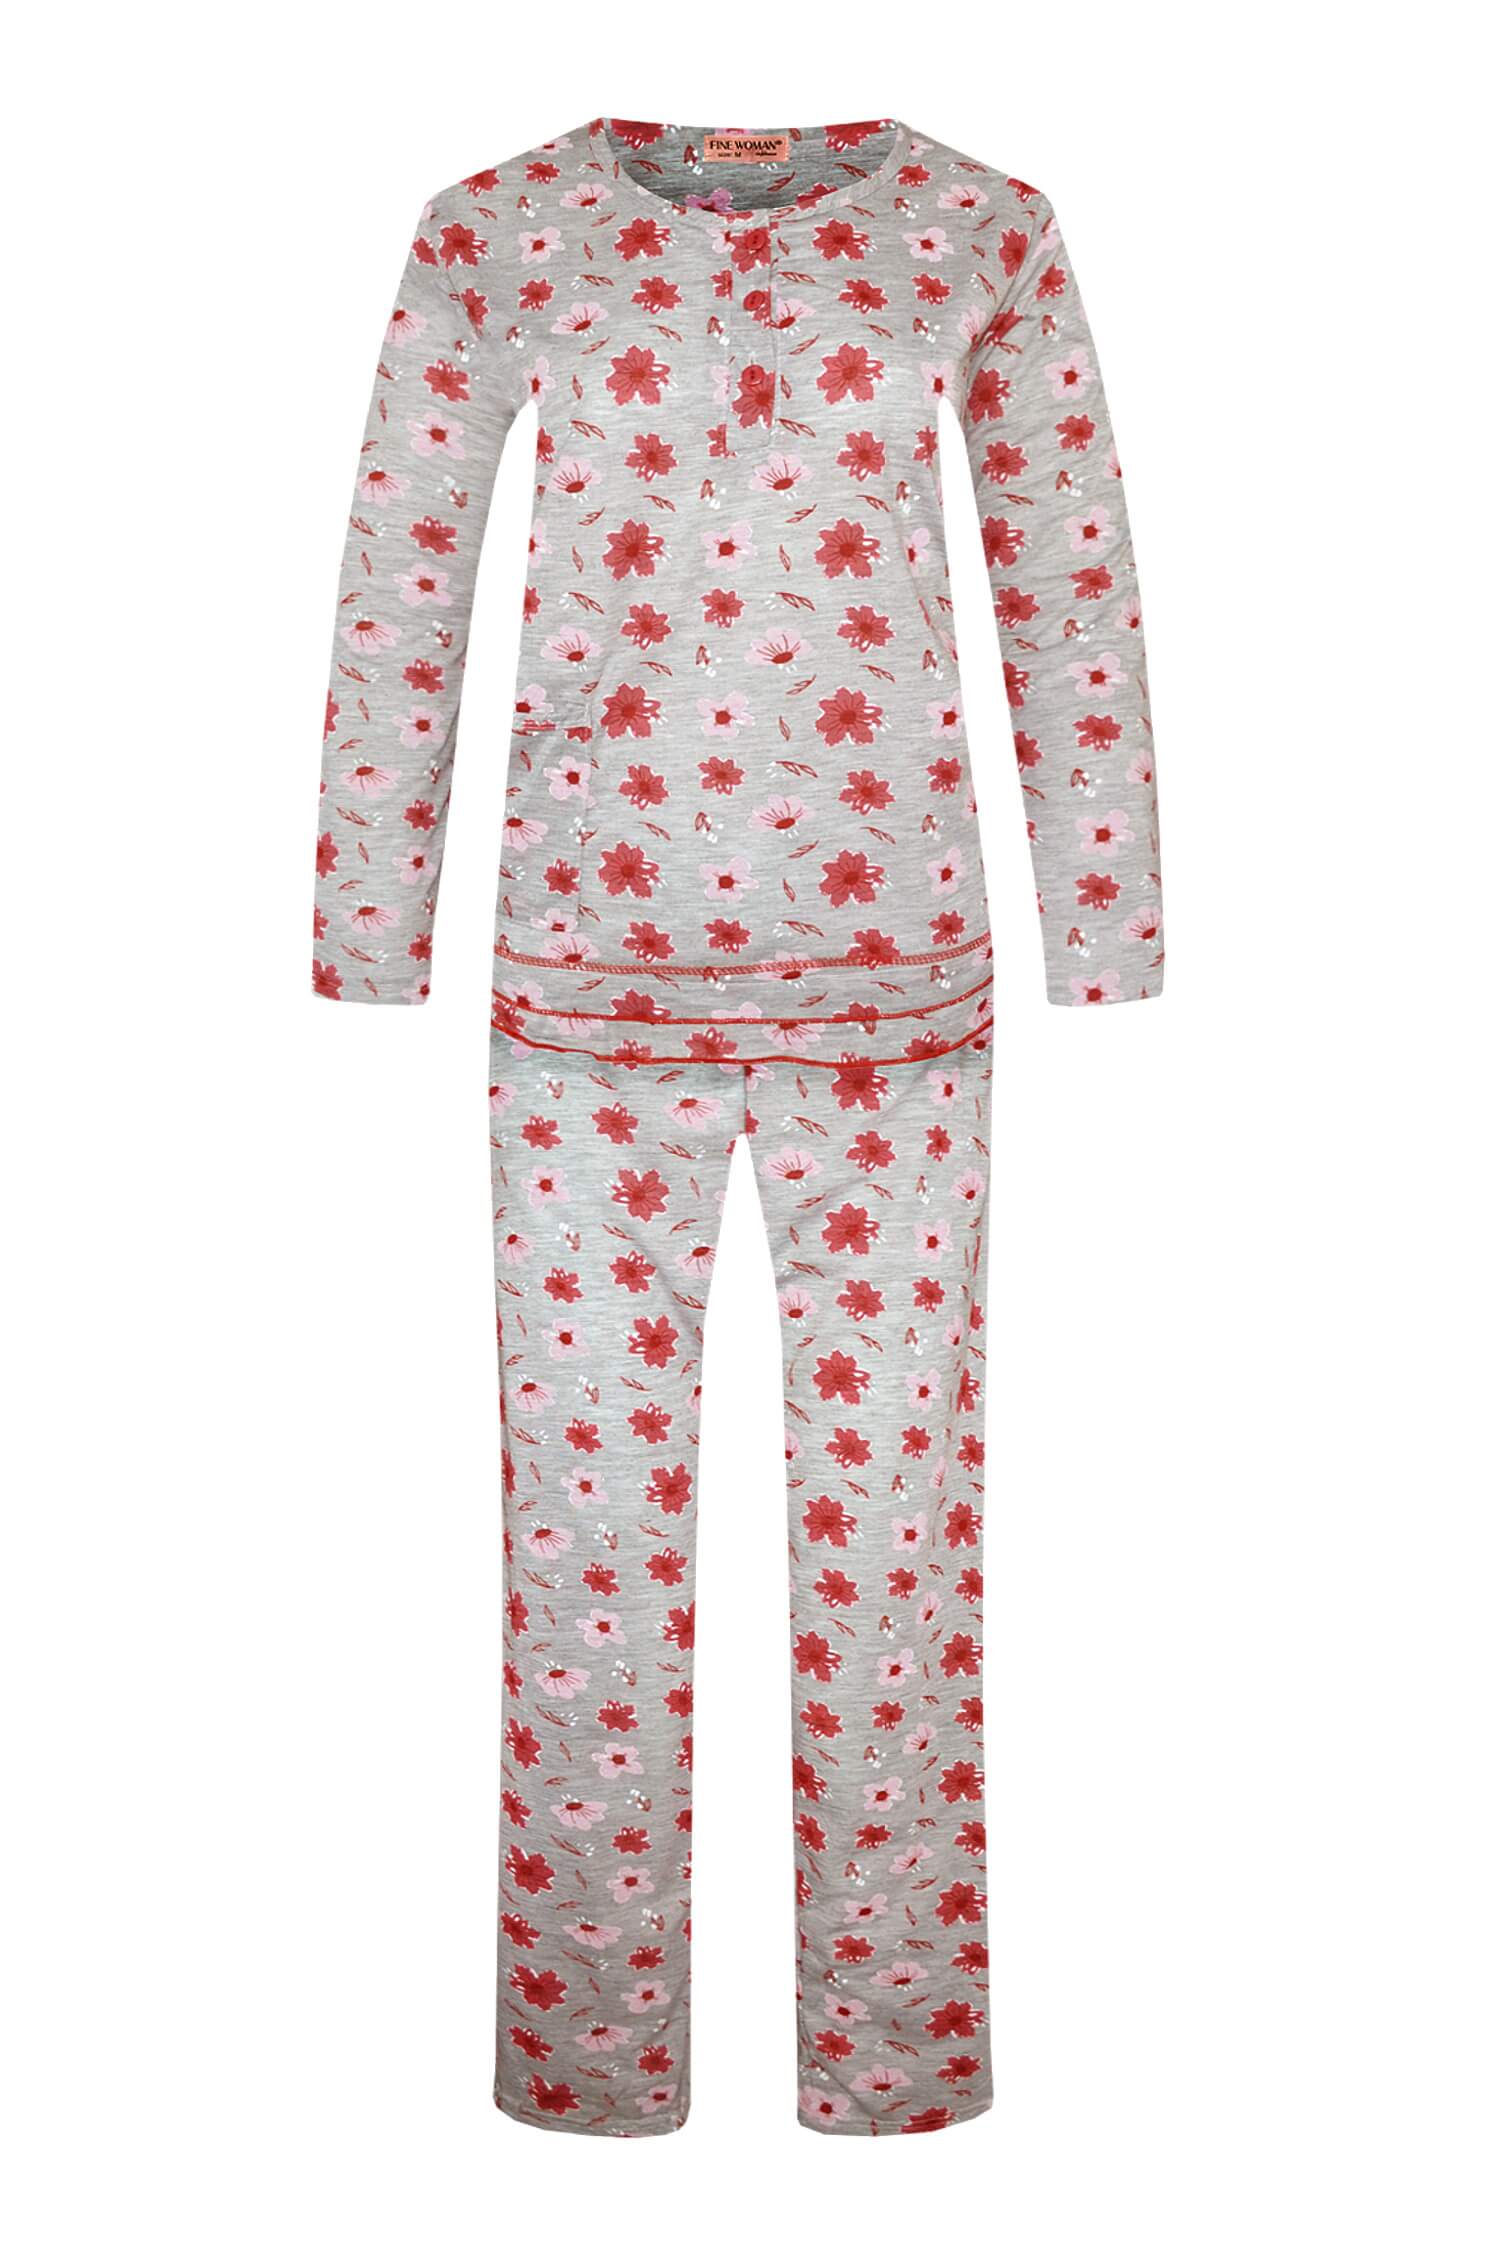 Arenda dámské dlouhé pyžamo 2297 XL růžová